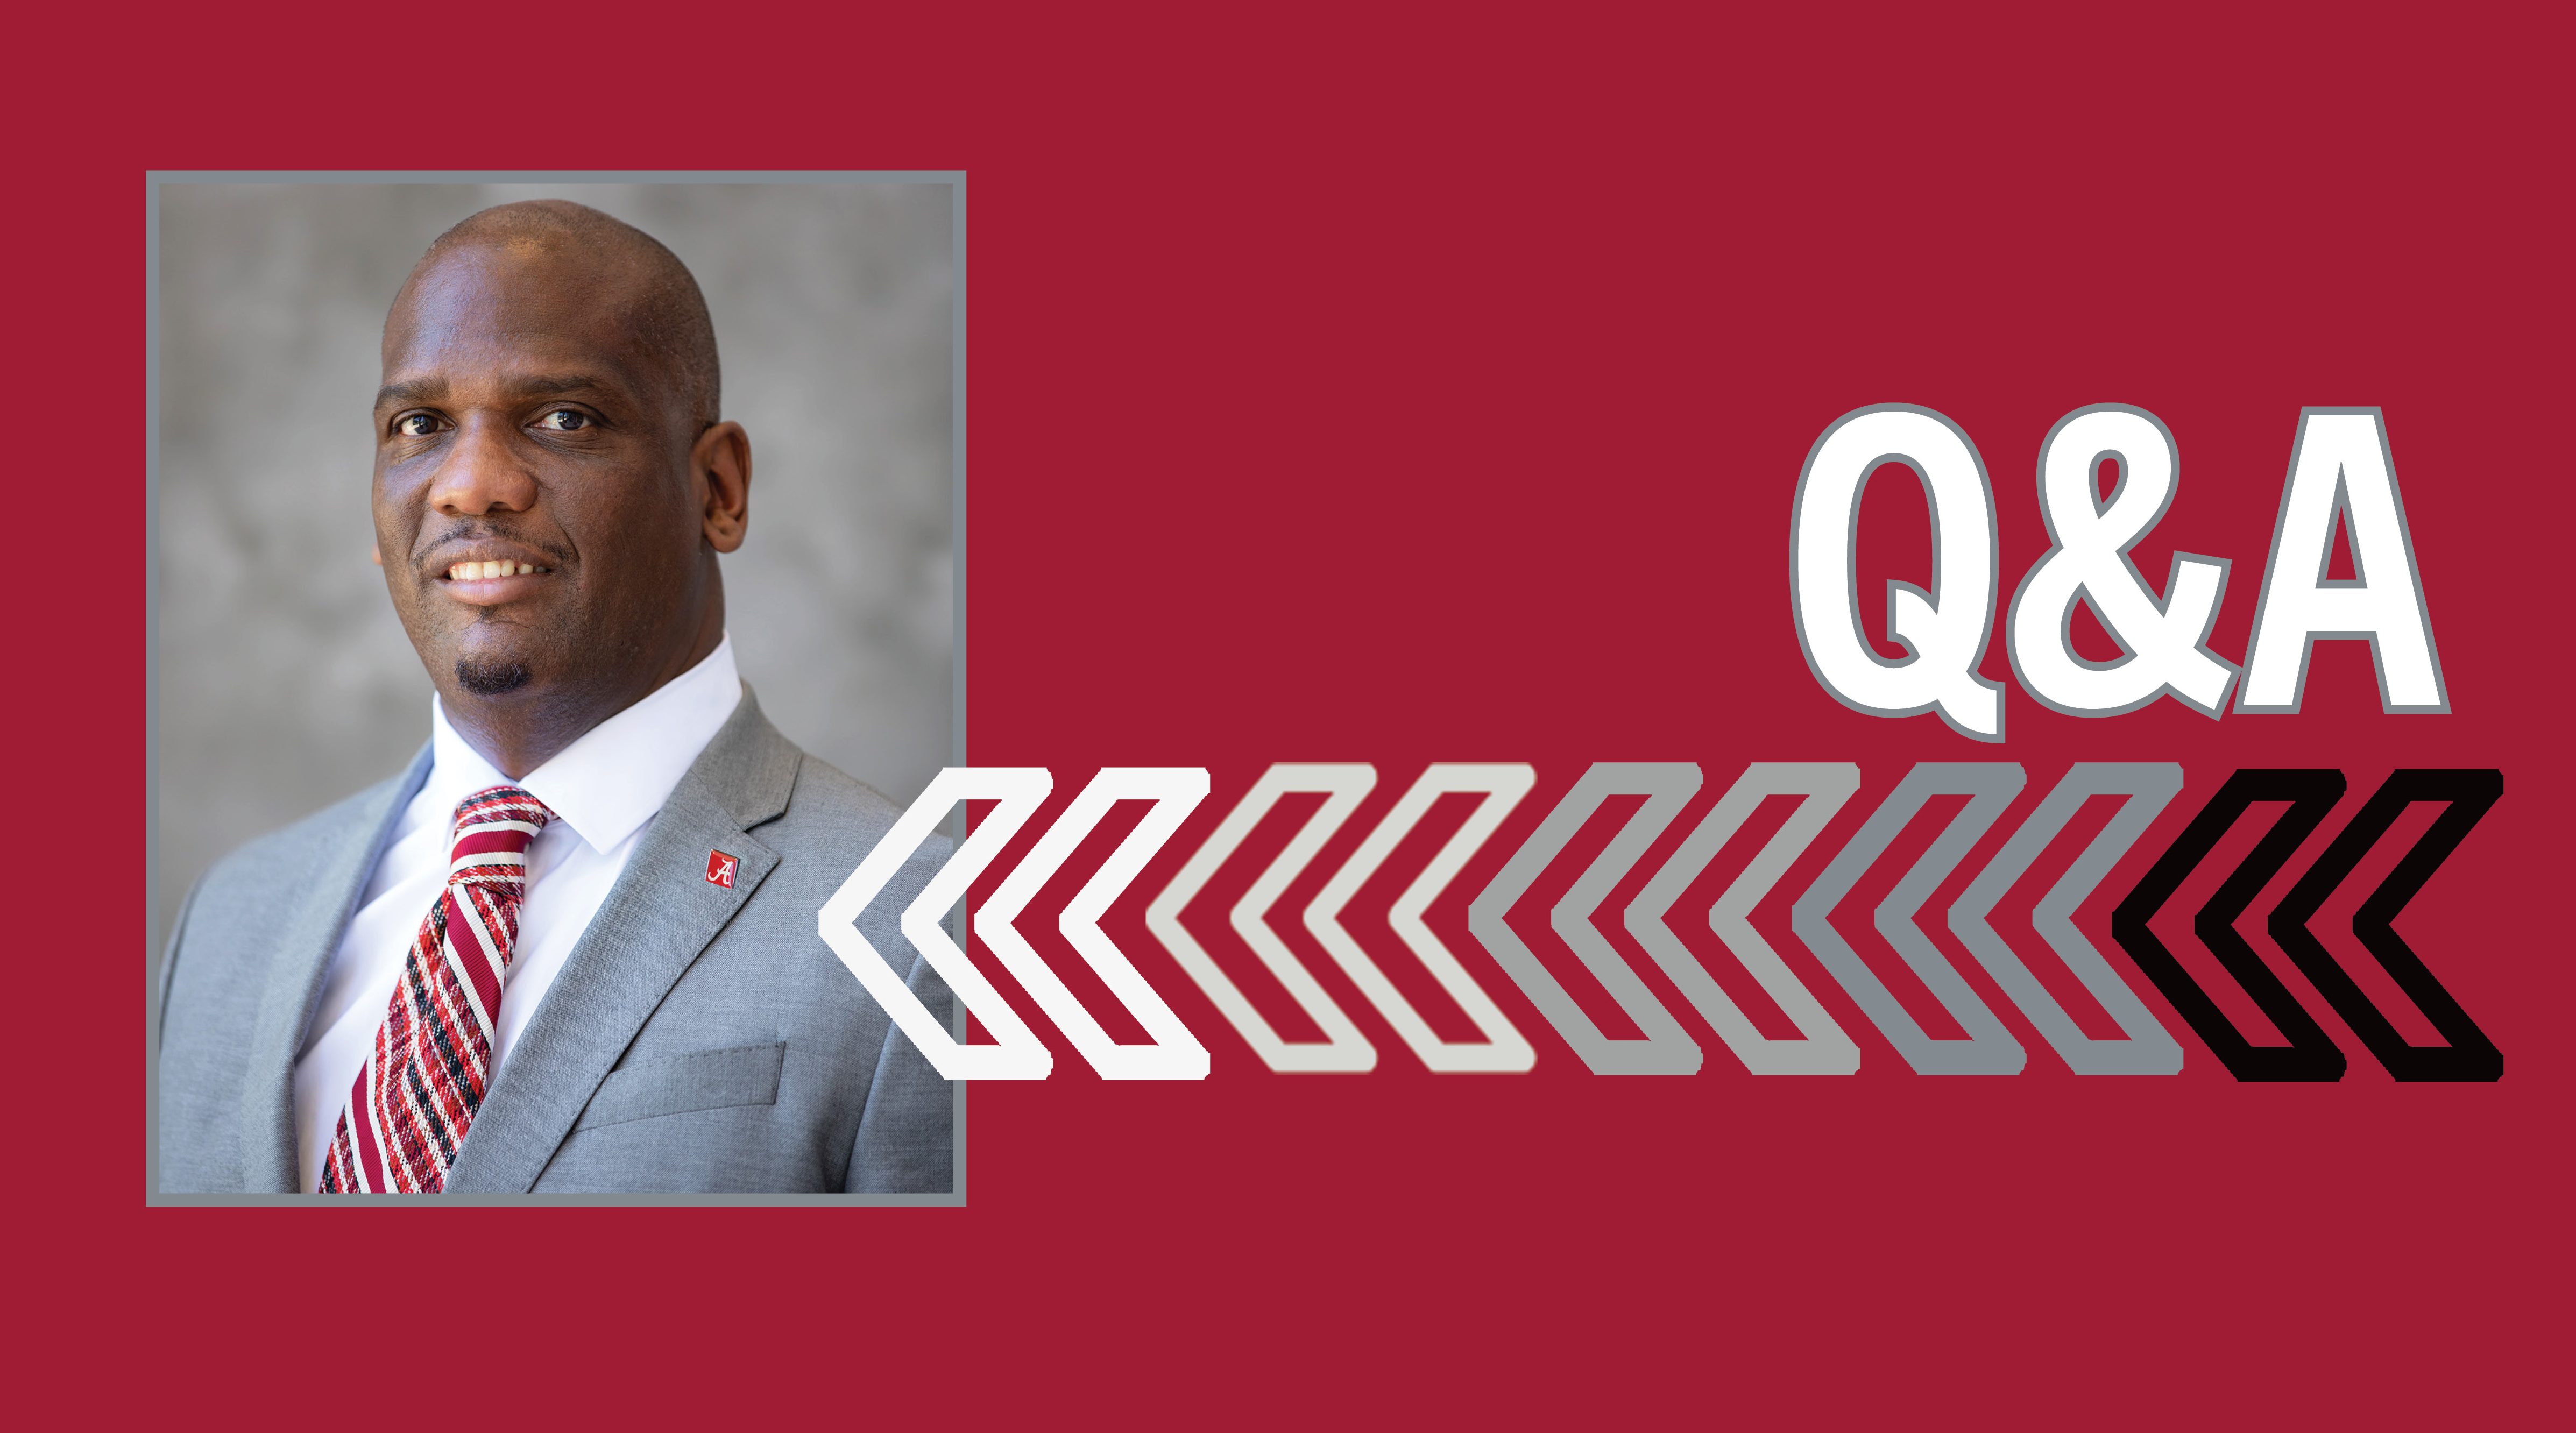 Q&A with BFSA President Chad Jackson